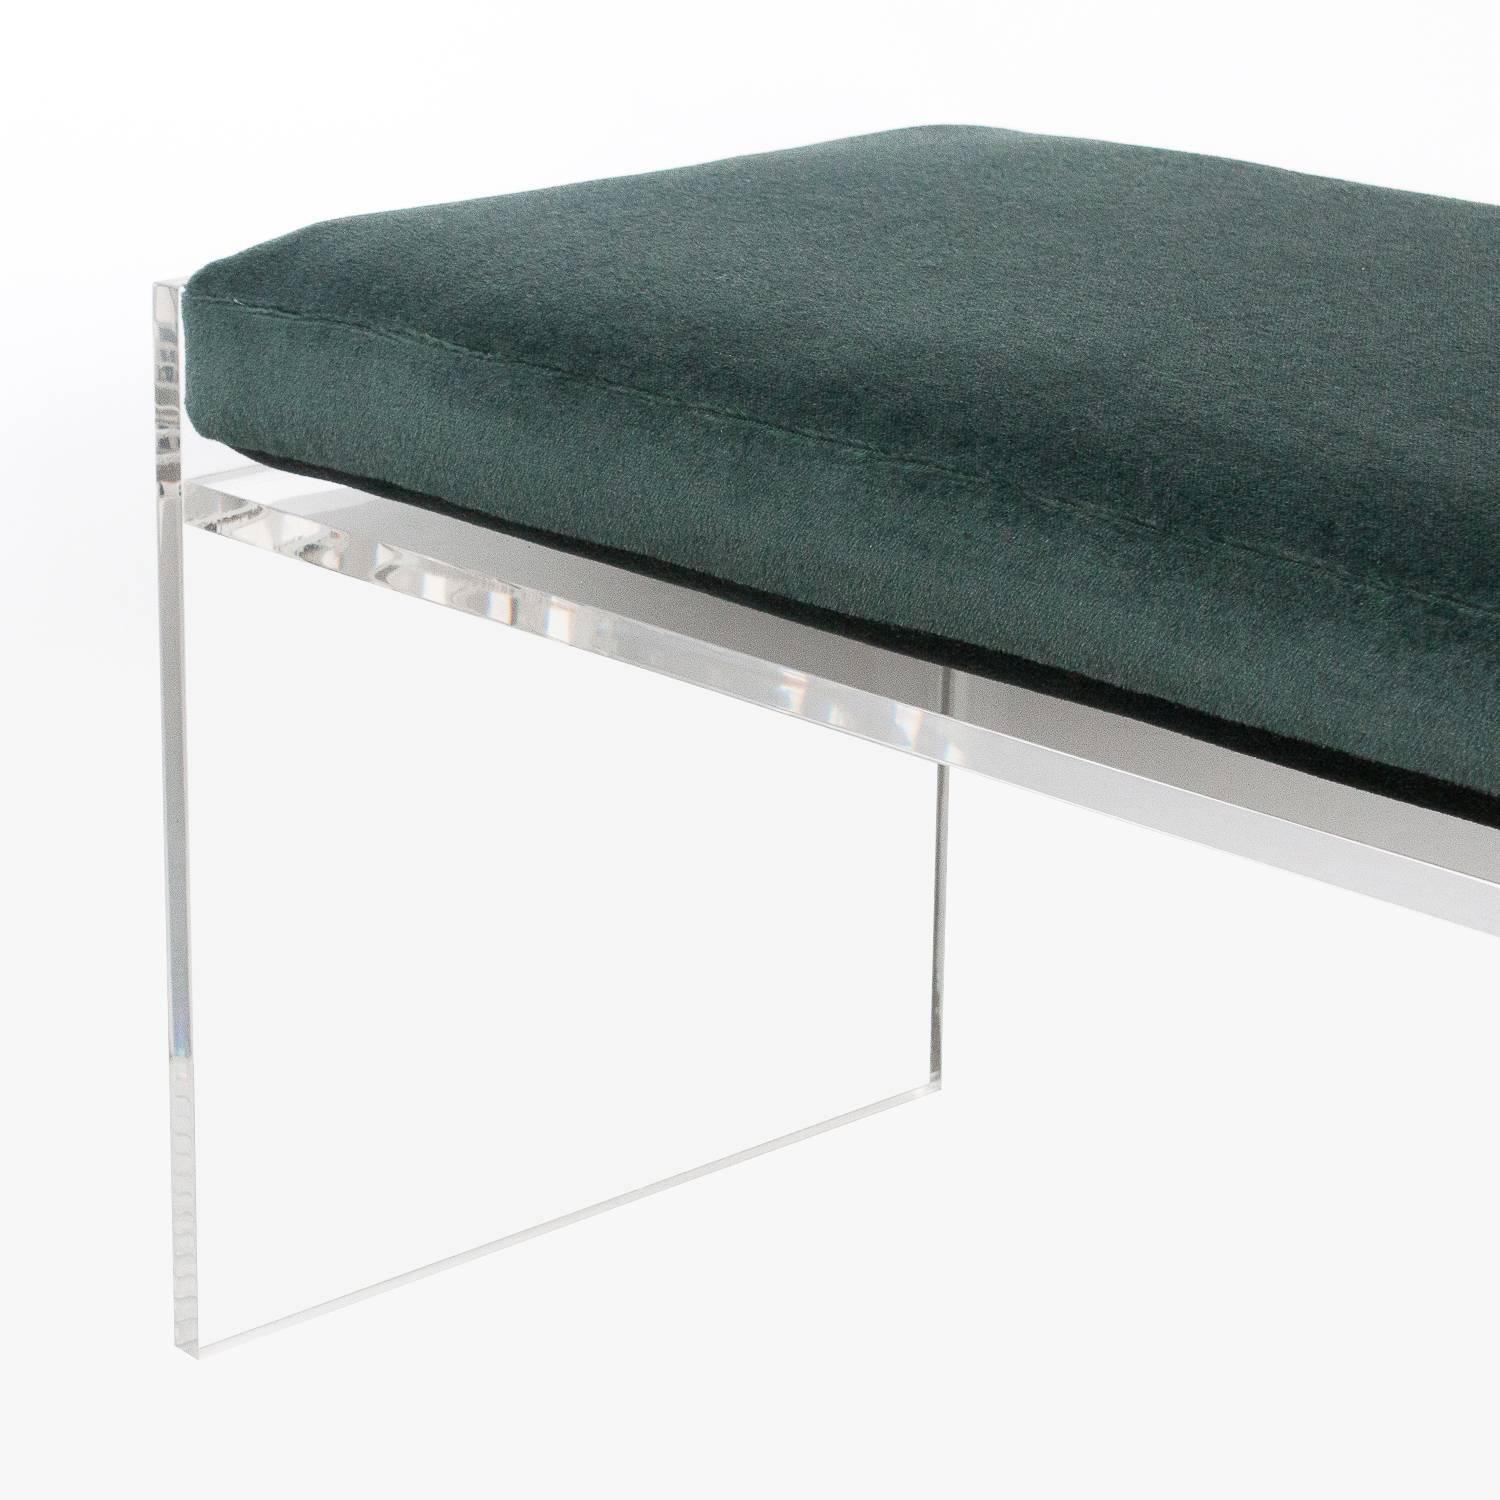 acrylic bench with cushion